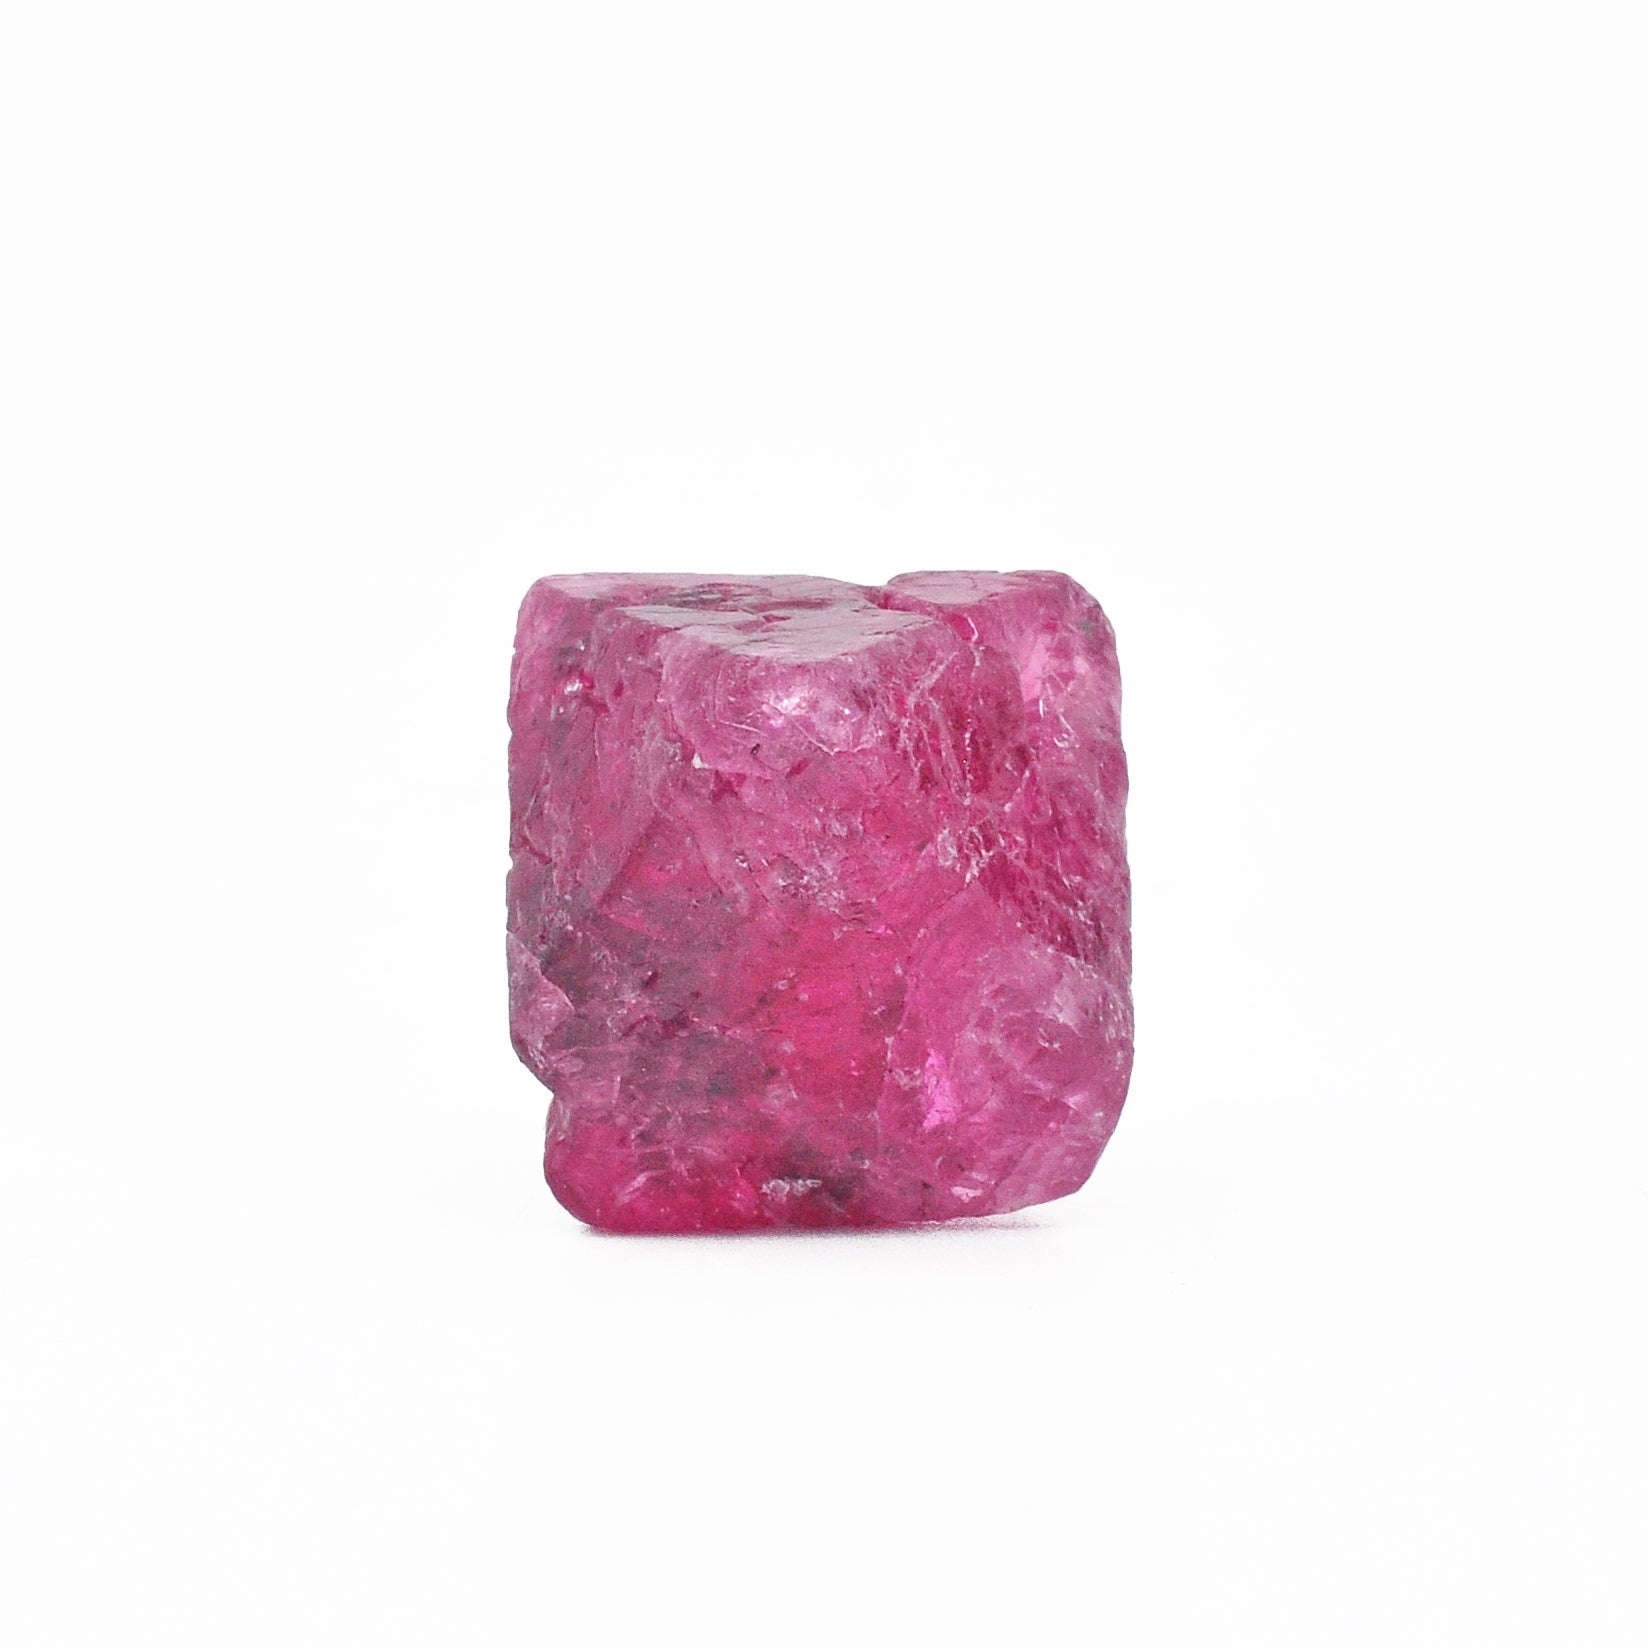 Spinel 21.96 mm 8.3 grams Natural Gem Crystal - Tanzania - GGX-163 - Crystalarium